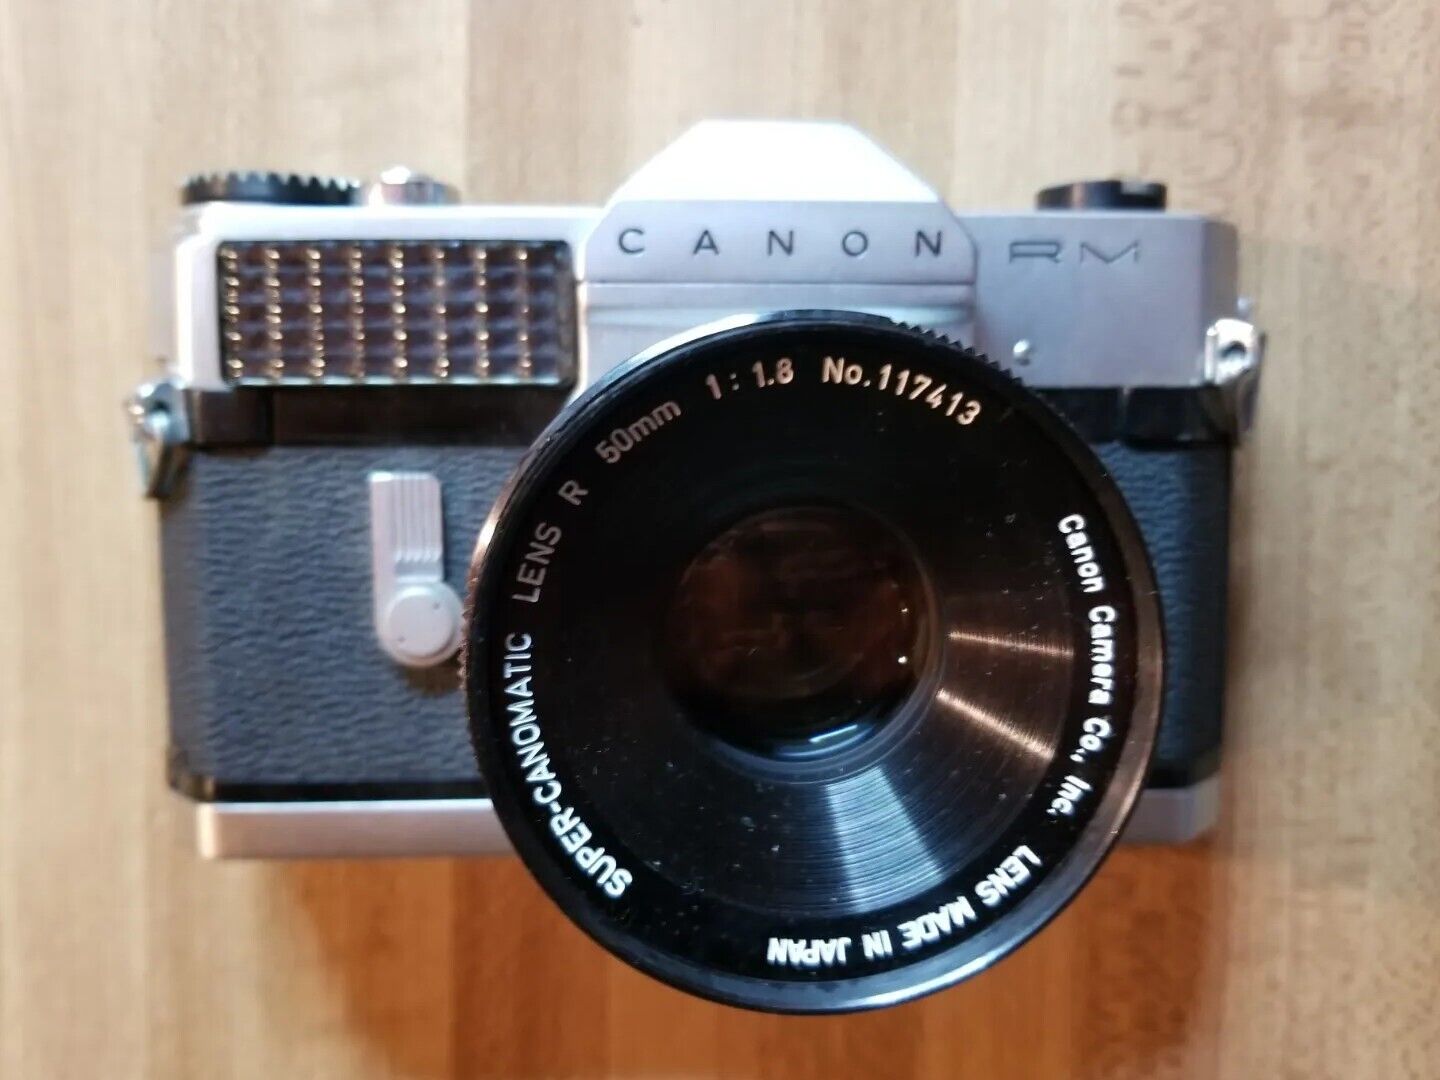 Canon Canonflex RM Camera w/ SUPER-CANOMATIC Lens R 50mm F1.8! 